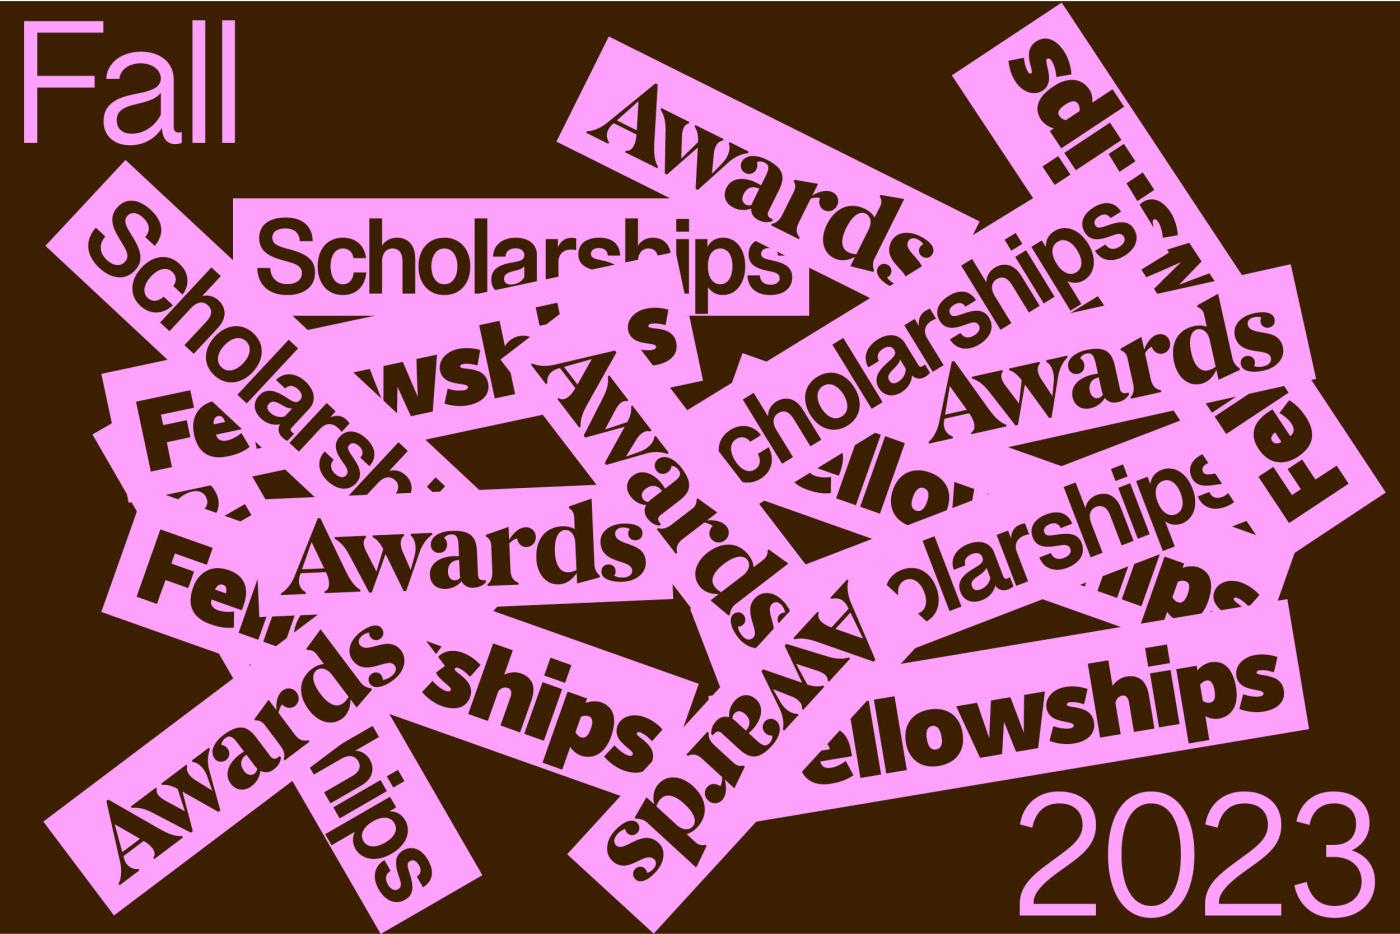 Fall 2023 Scholarships Awards Fellowships